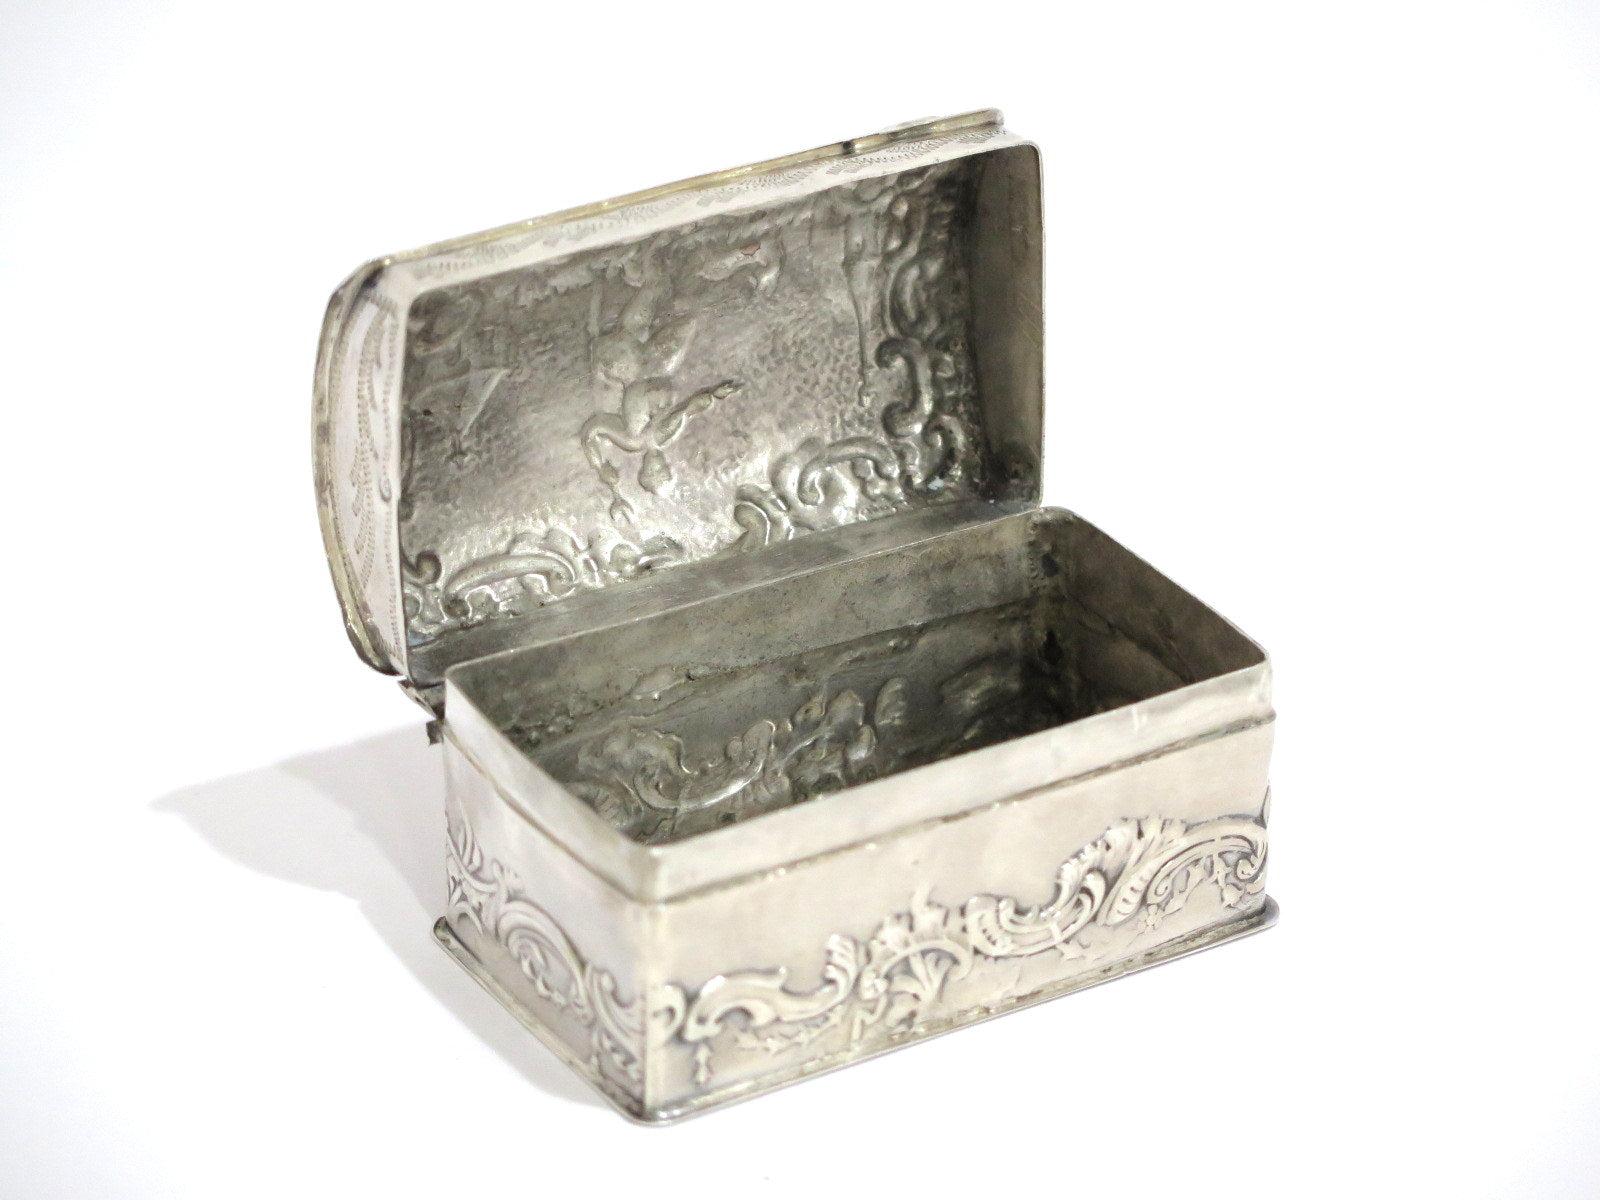 20th Century European Silver Antique Dutch Religious Theme Chest-Shaped Snuff Box